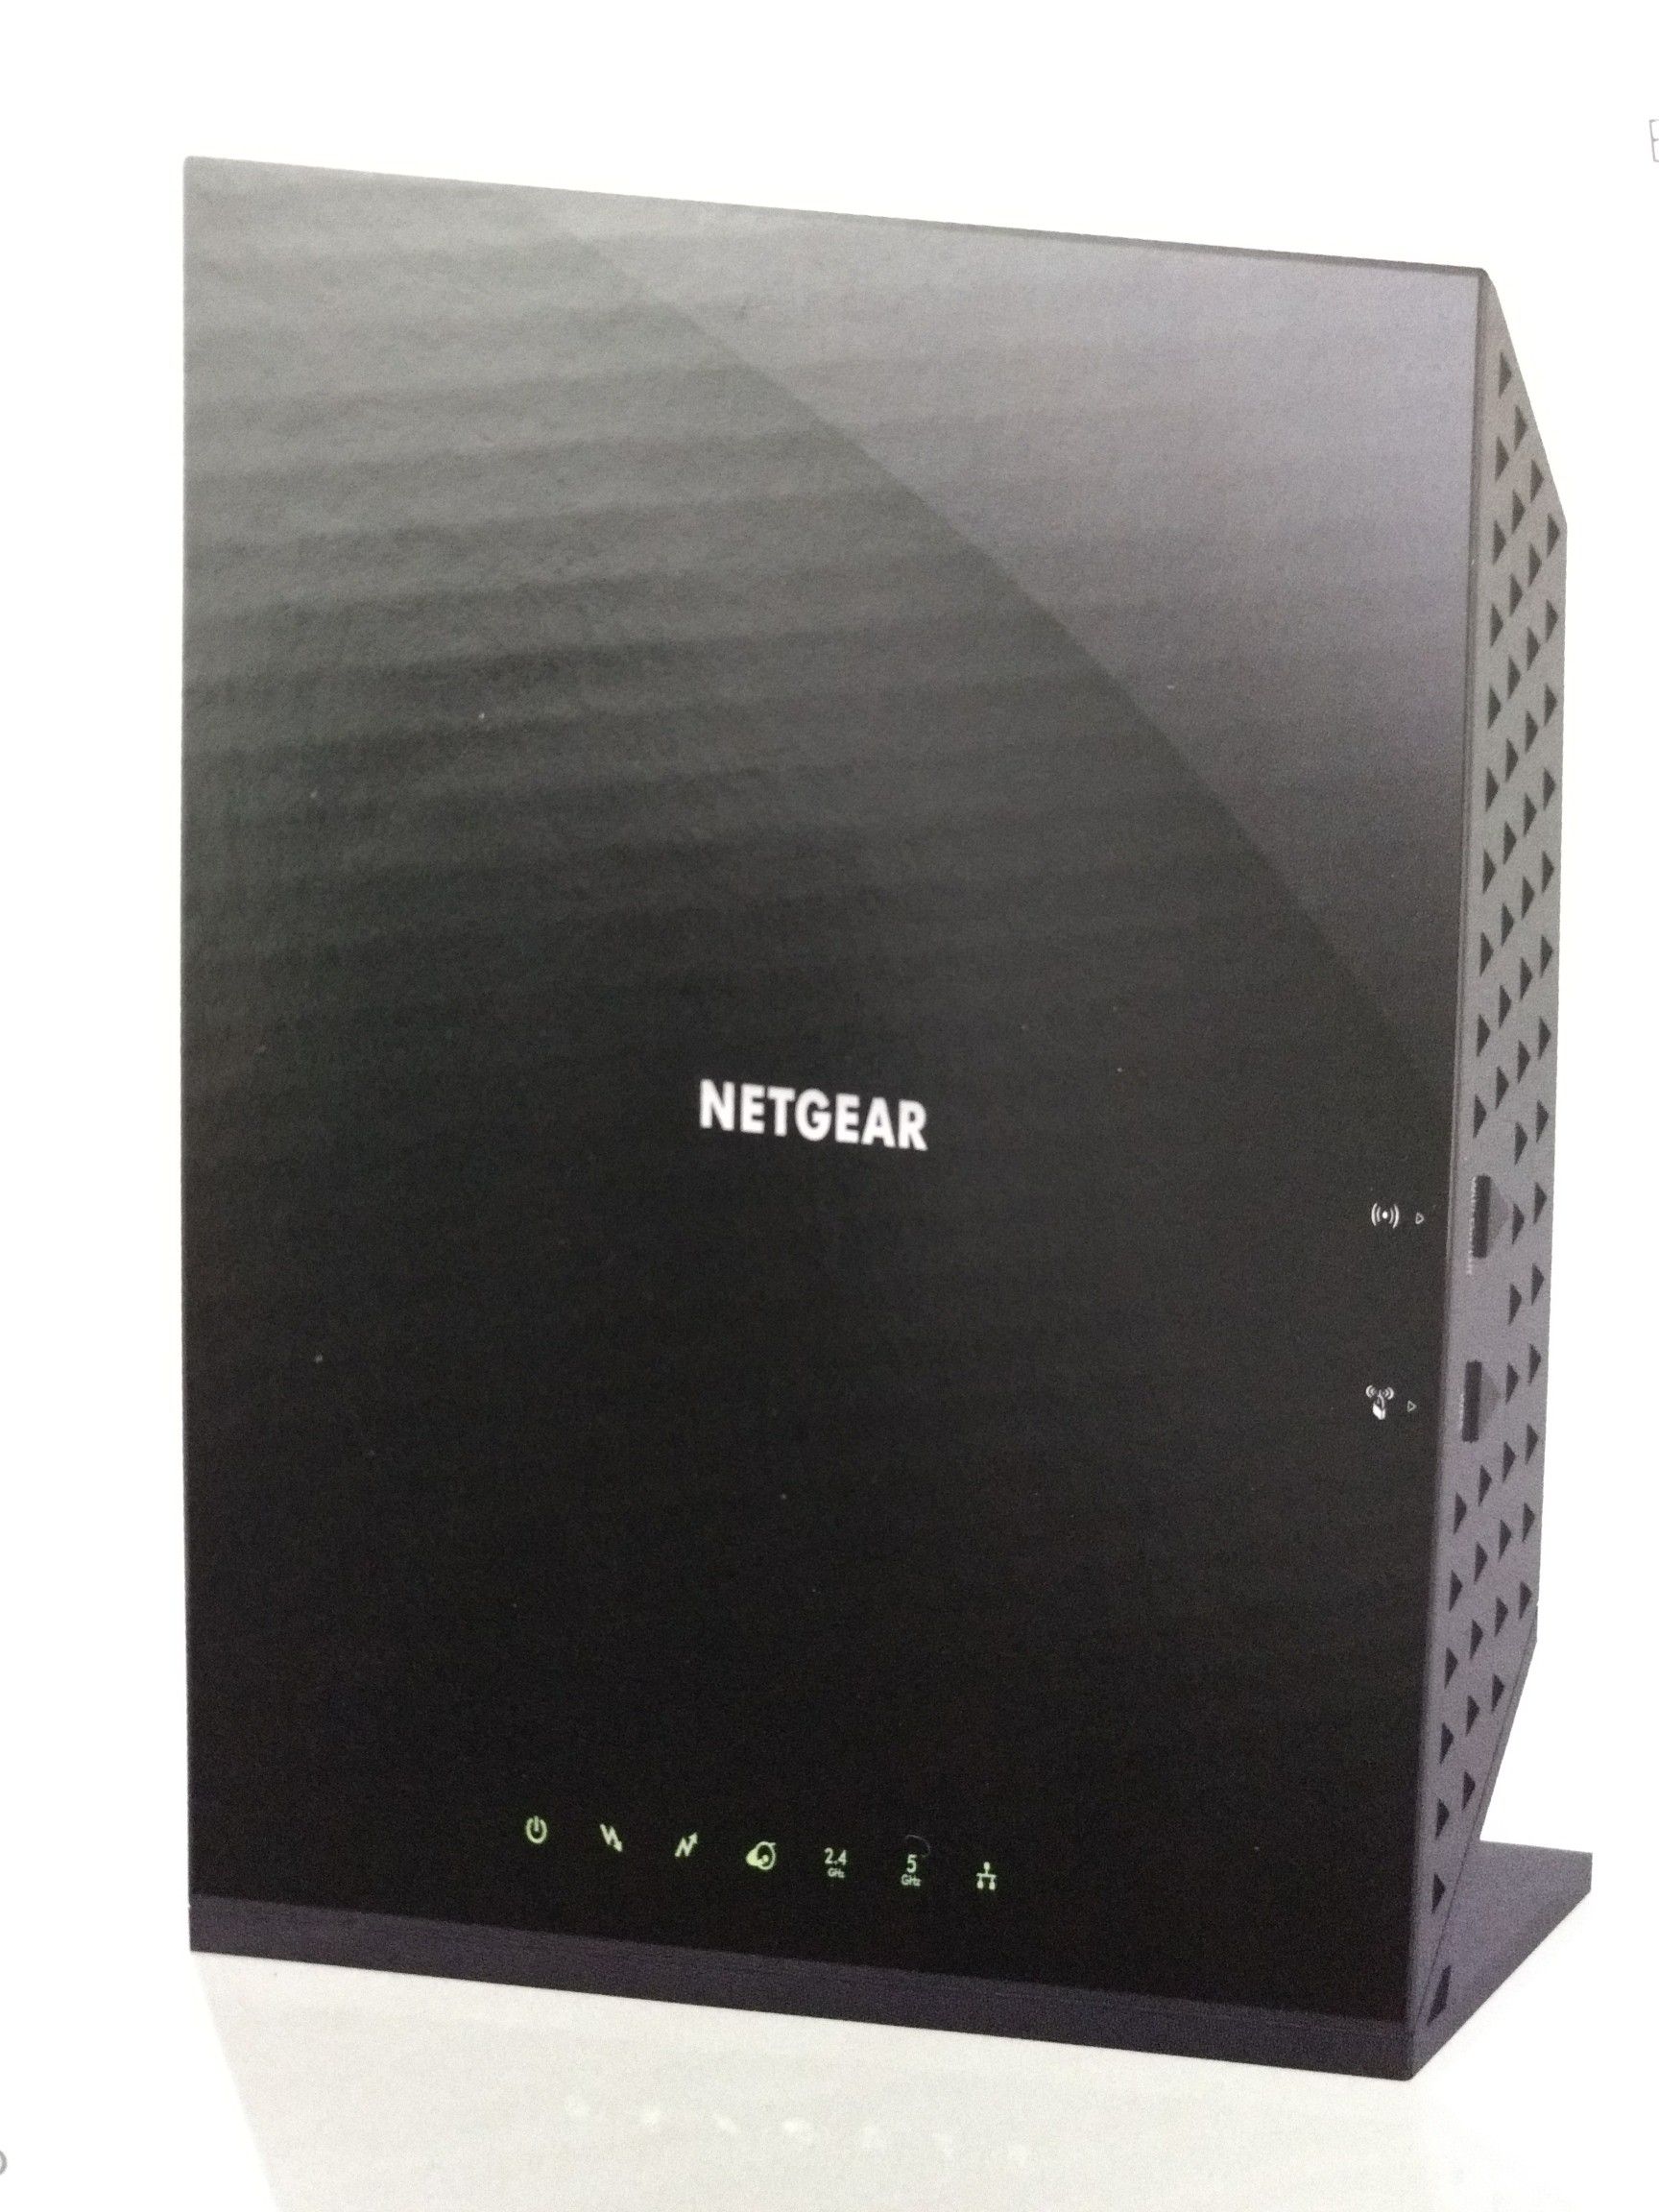 NETGEAR AC 1600 WiFi Cable Modem Router